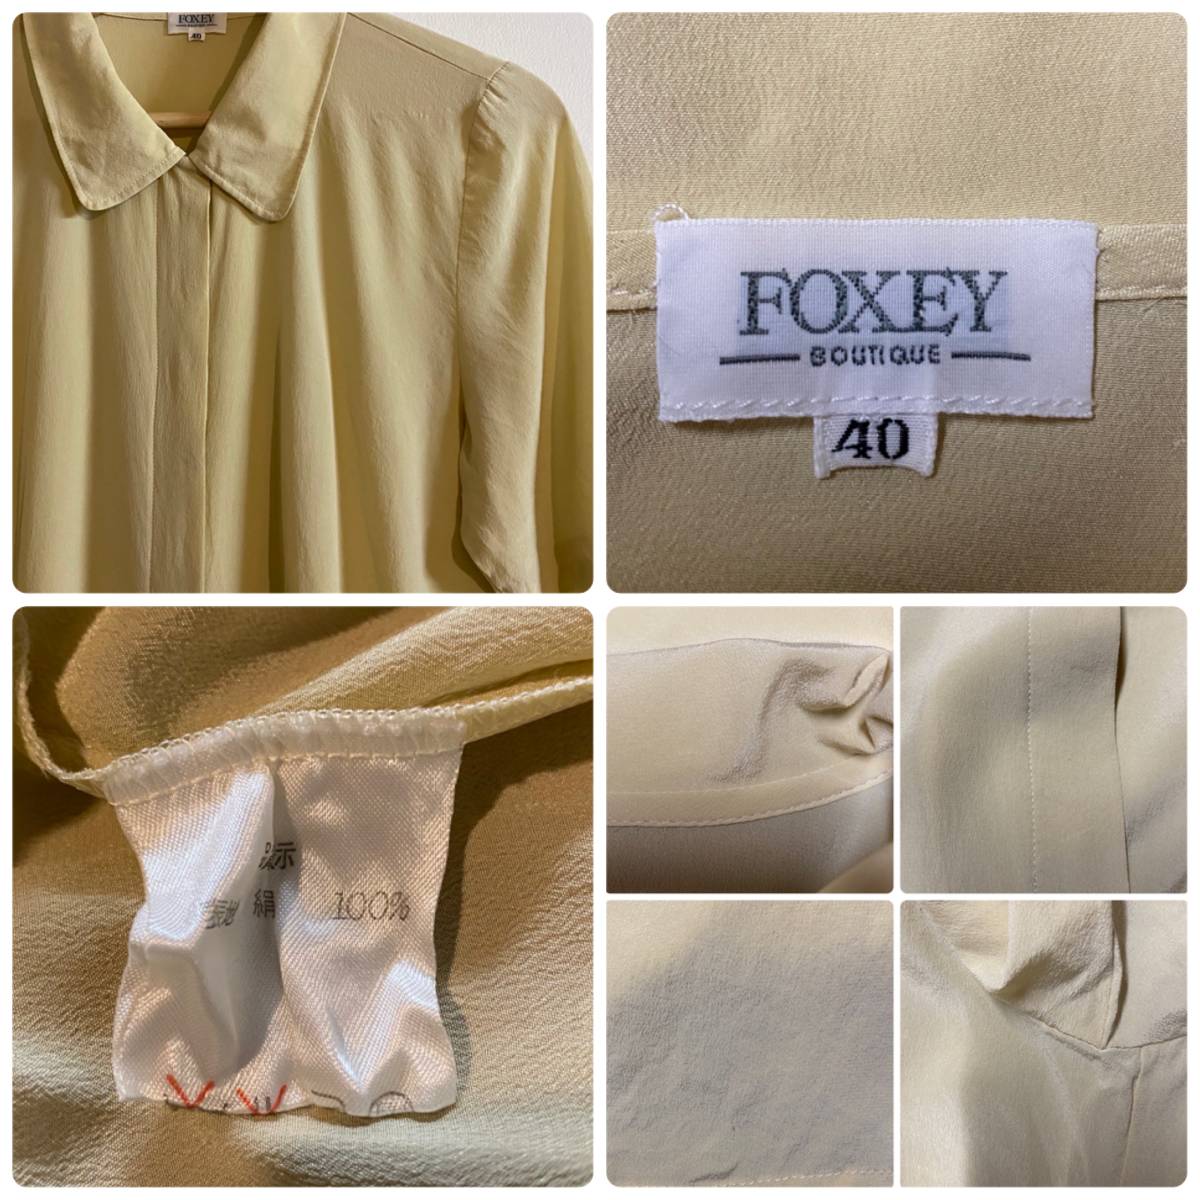 .../FOXEY ... шёлк  материал  дизайн  рубашка  40